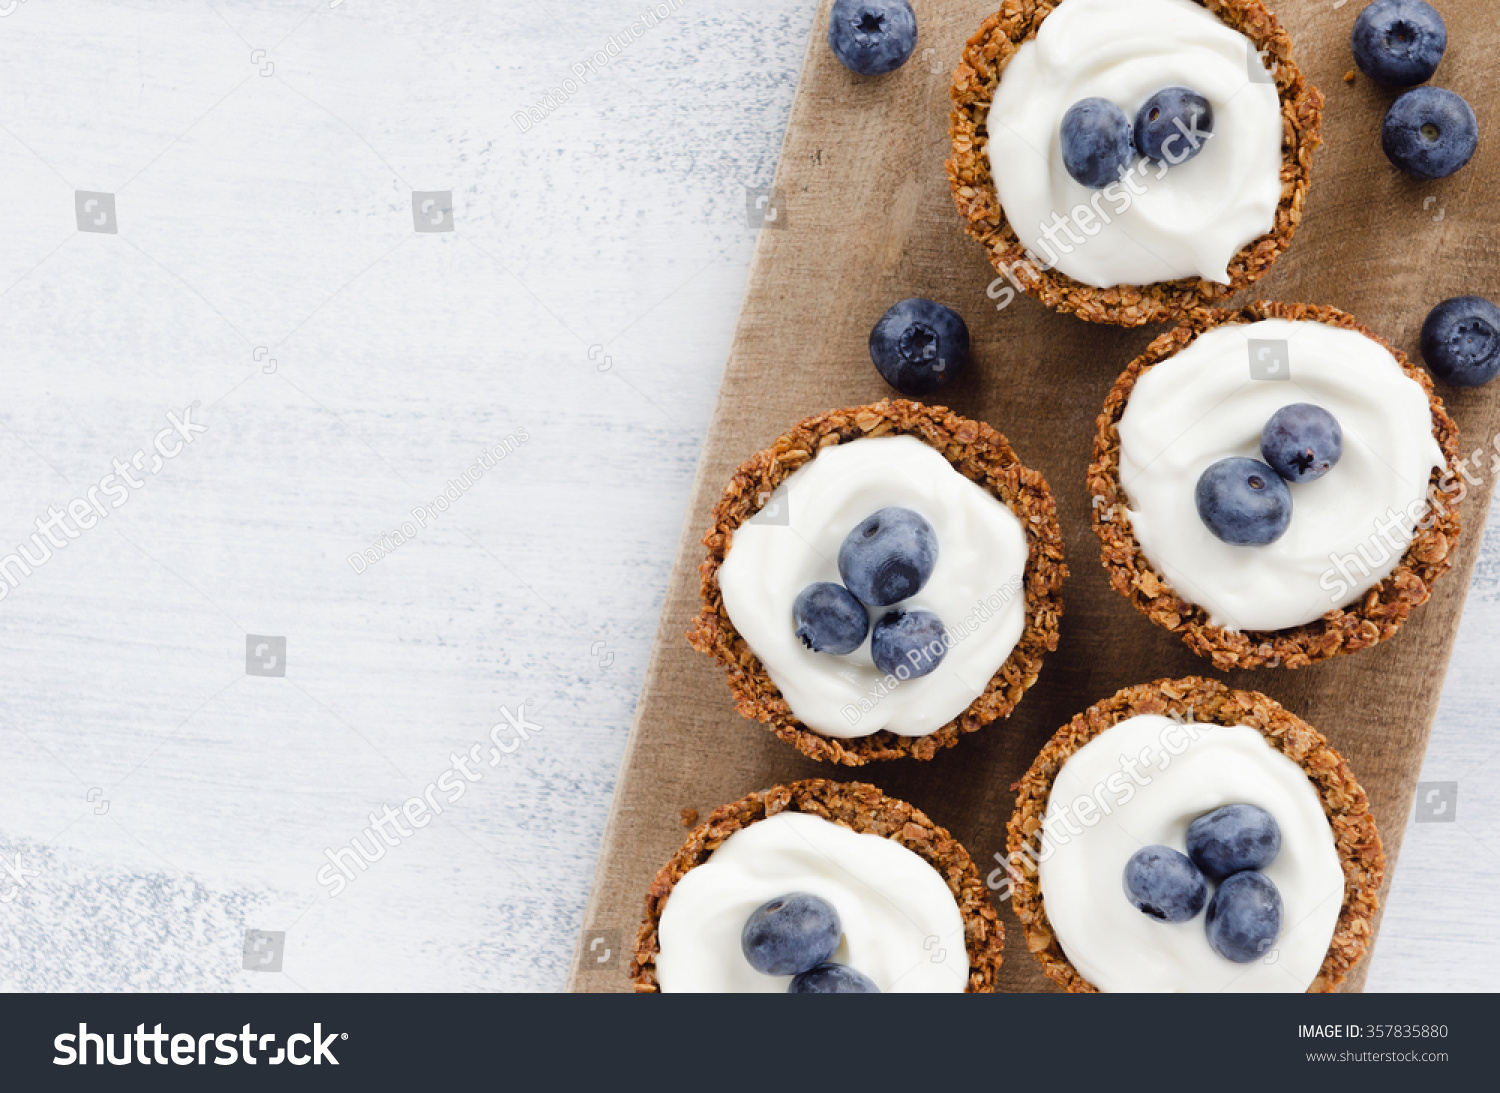 Blueberry tarts on a wooden platter, healthy dessert tart snack #357835880